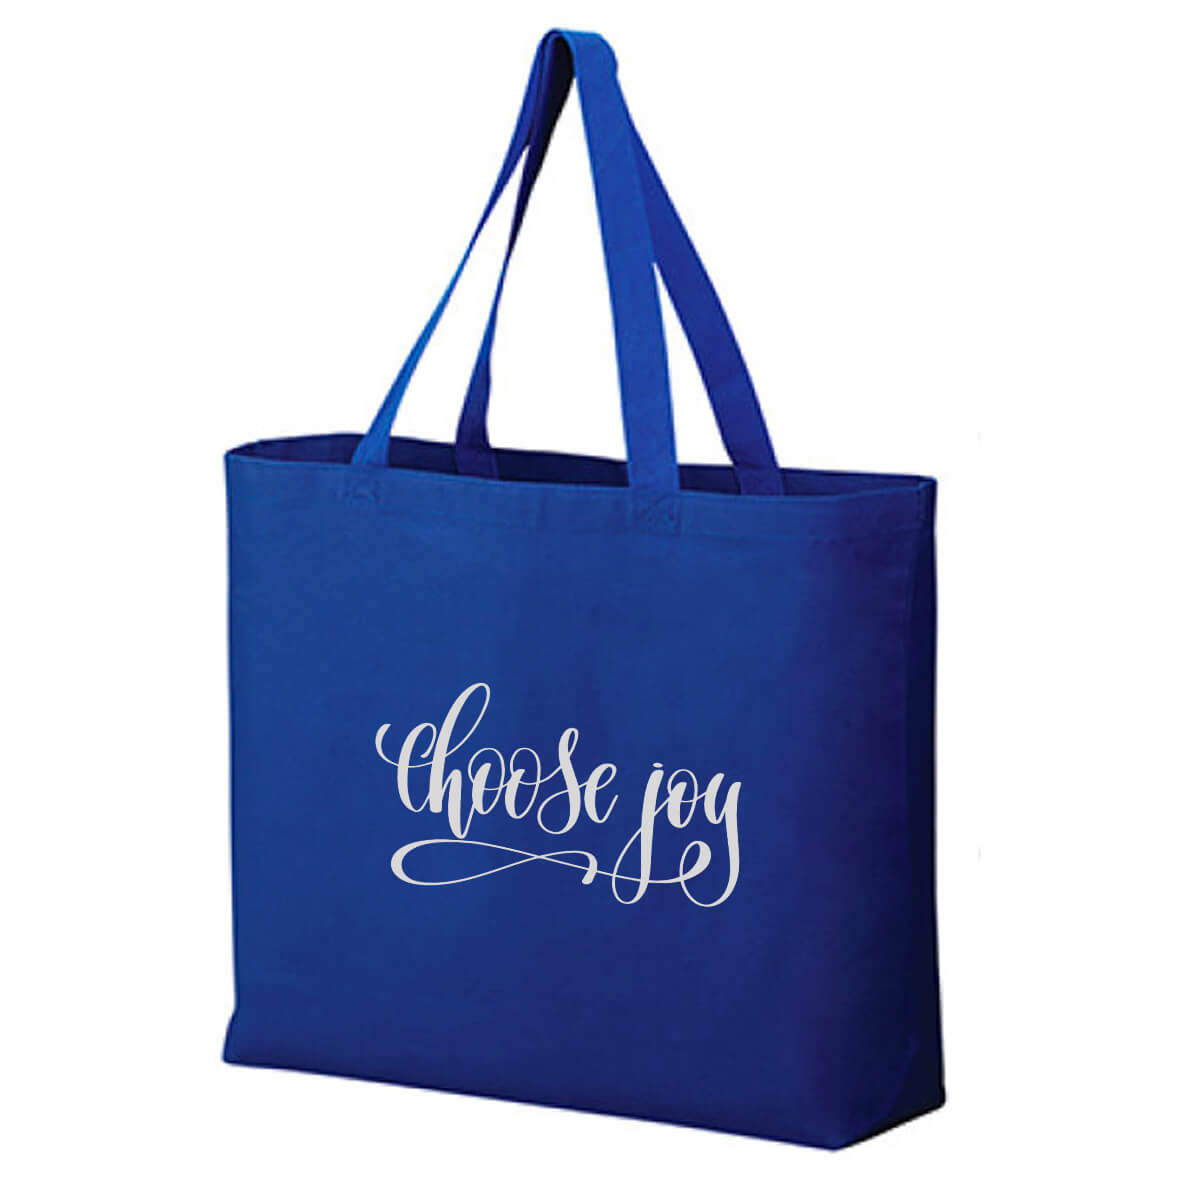 Choose Joy Jumbo Tote Bag